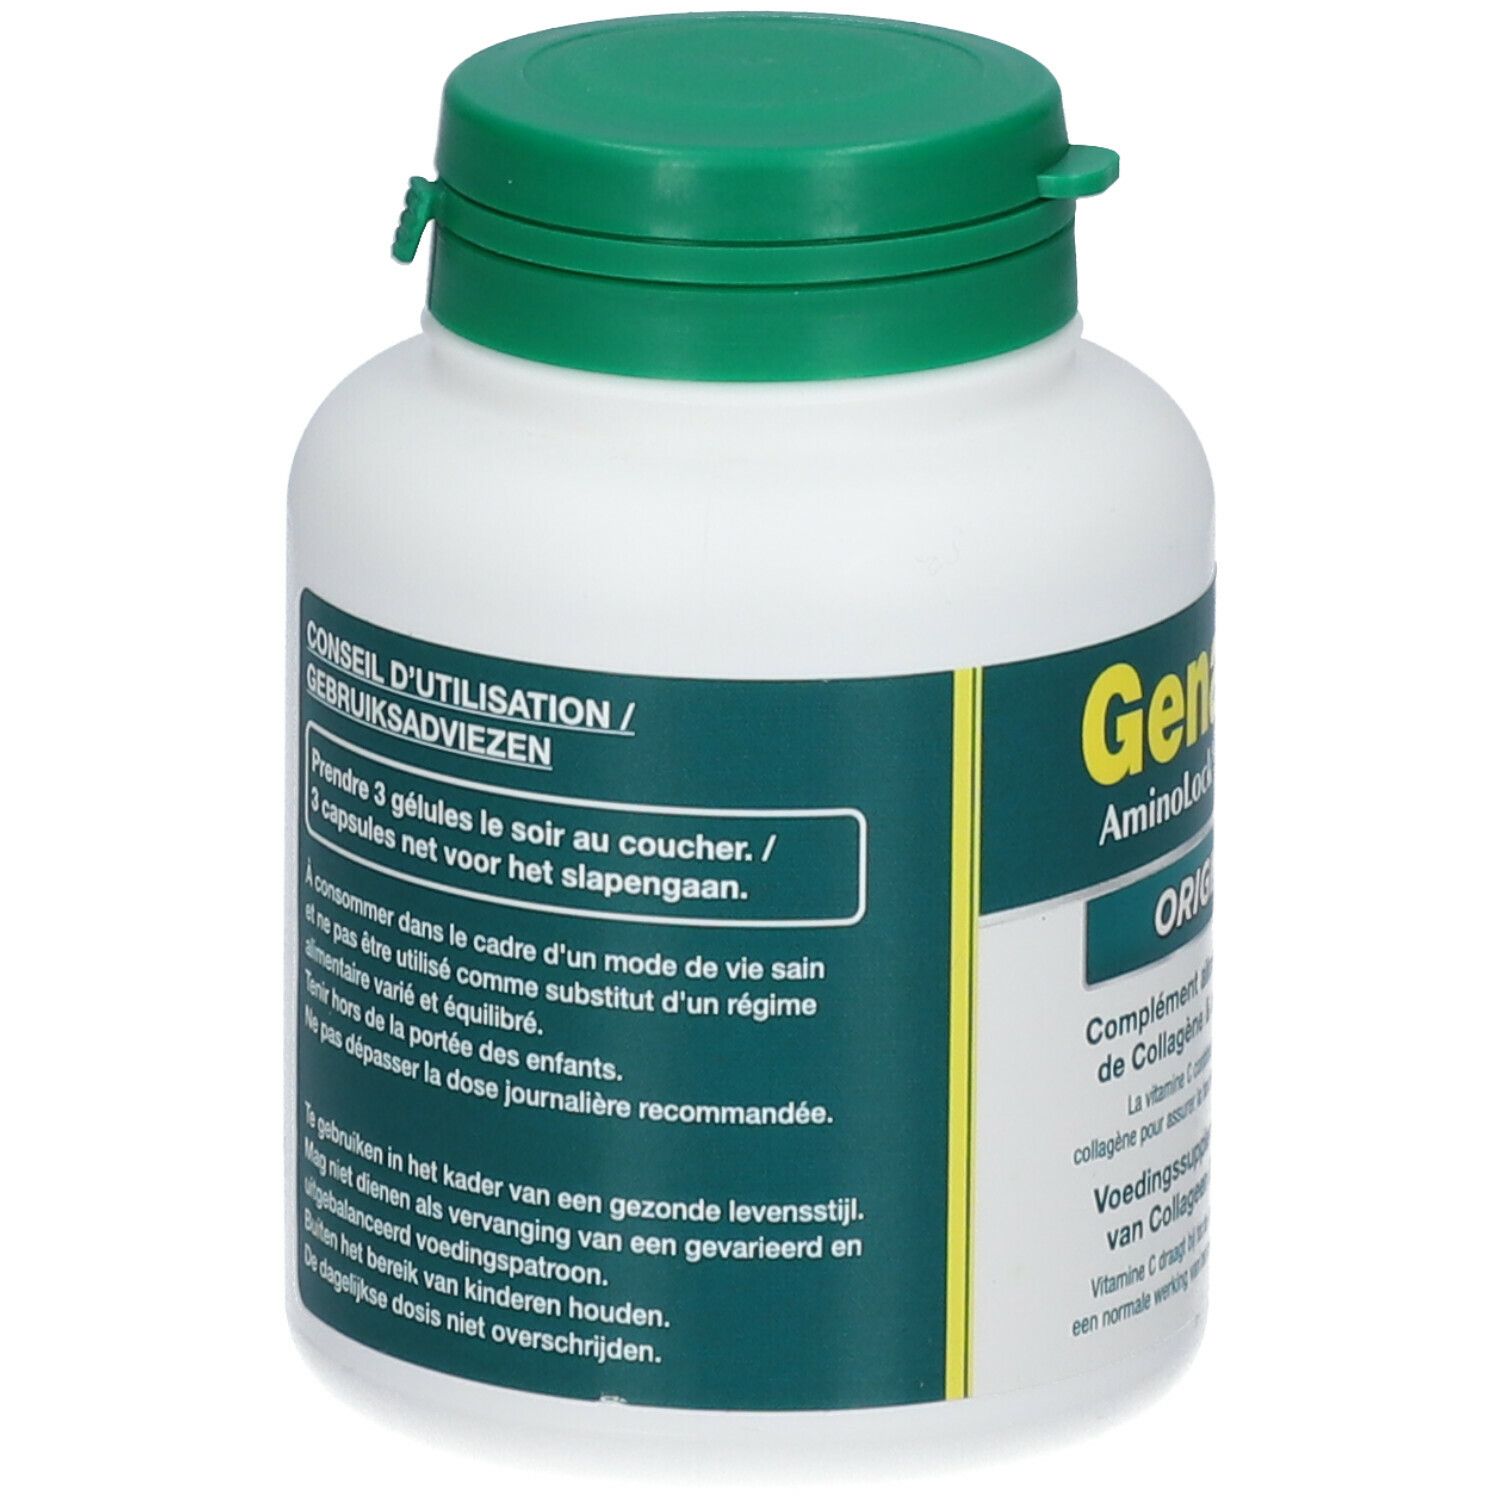 Genacol® 400 mg